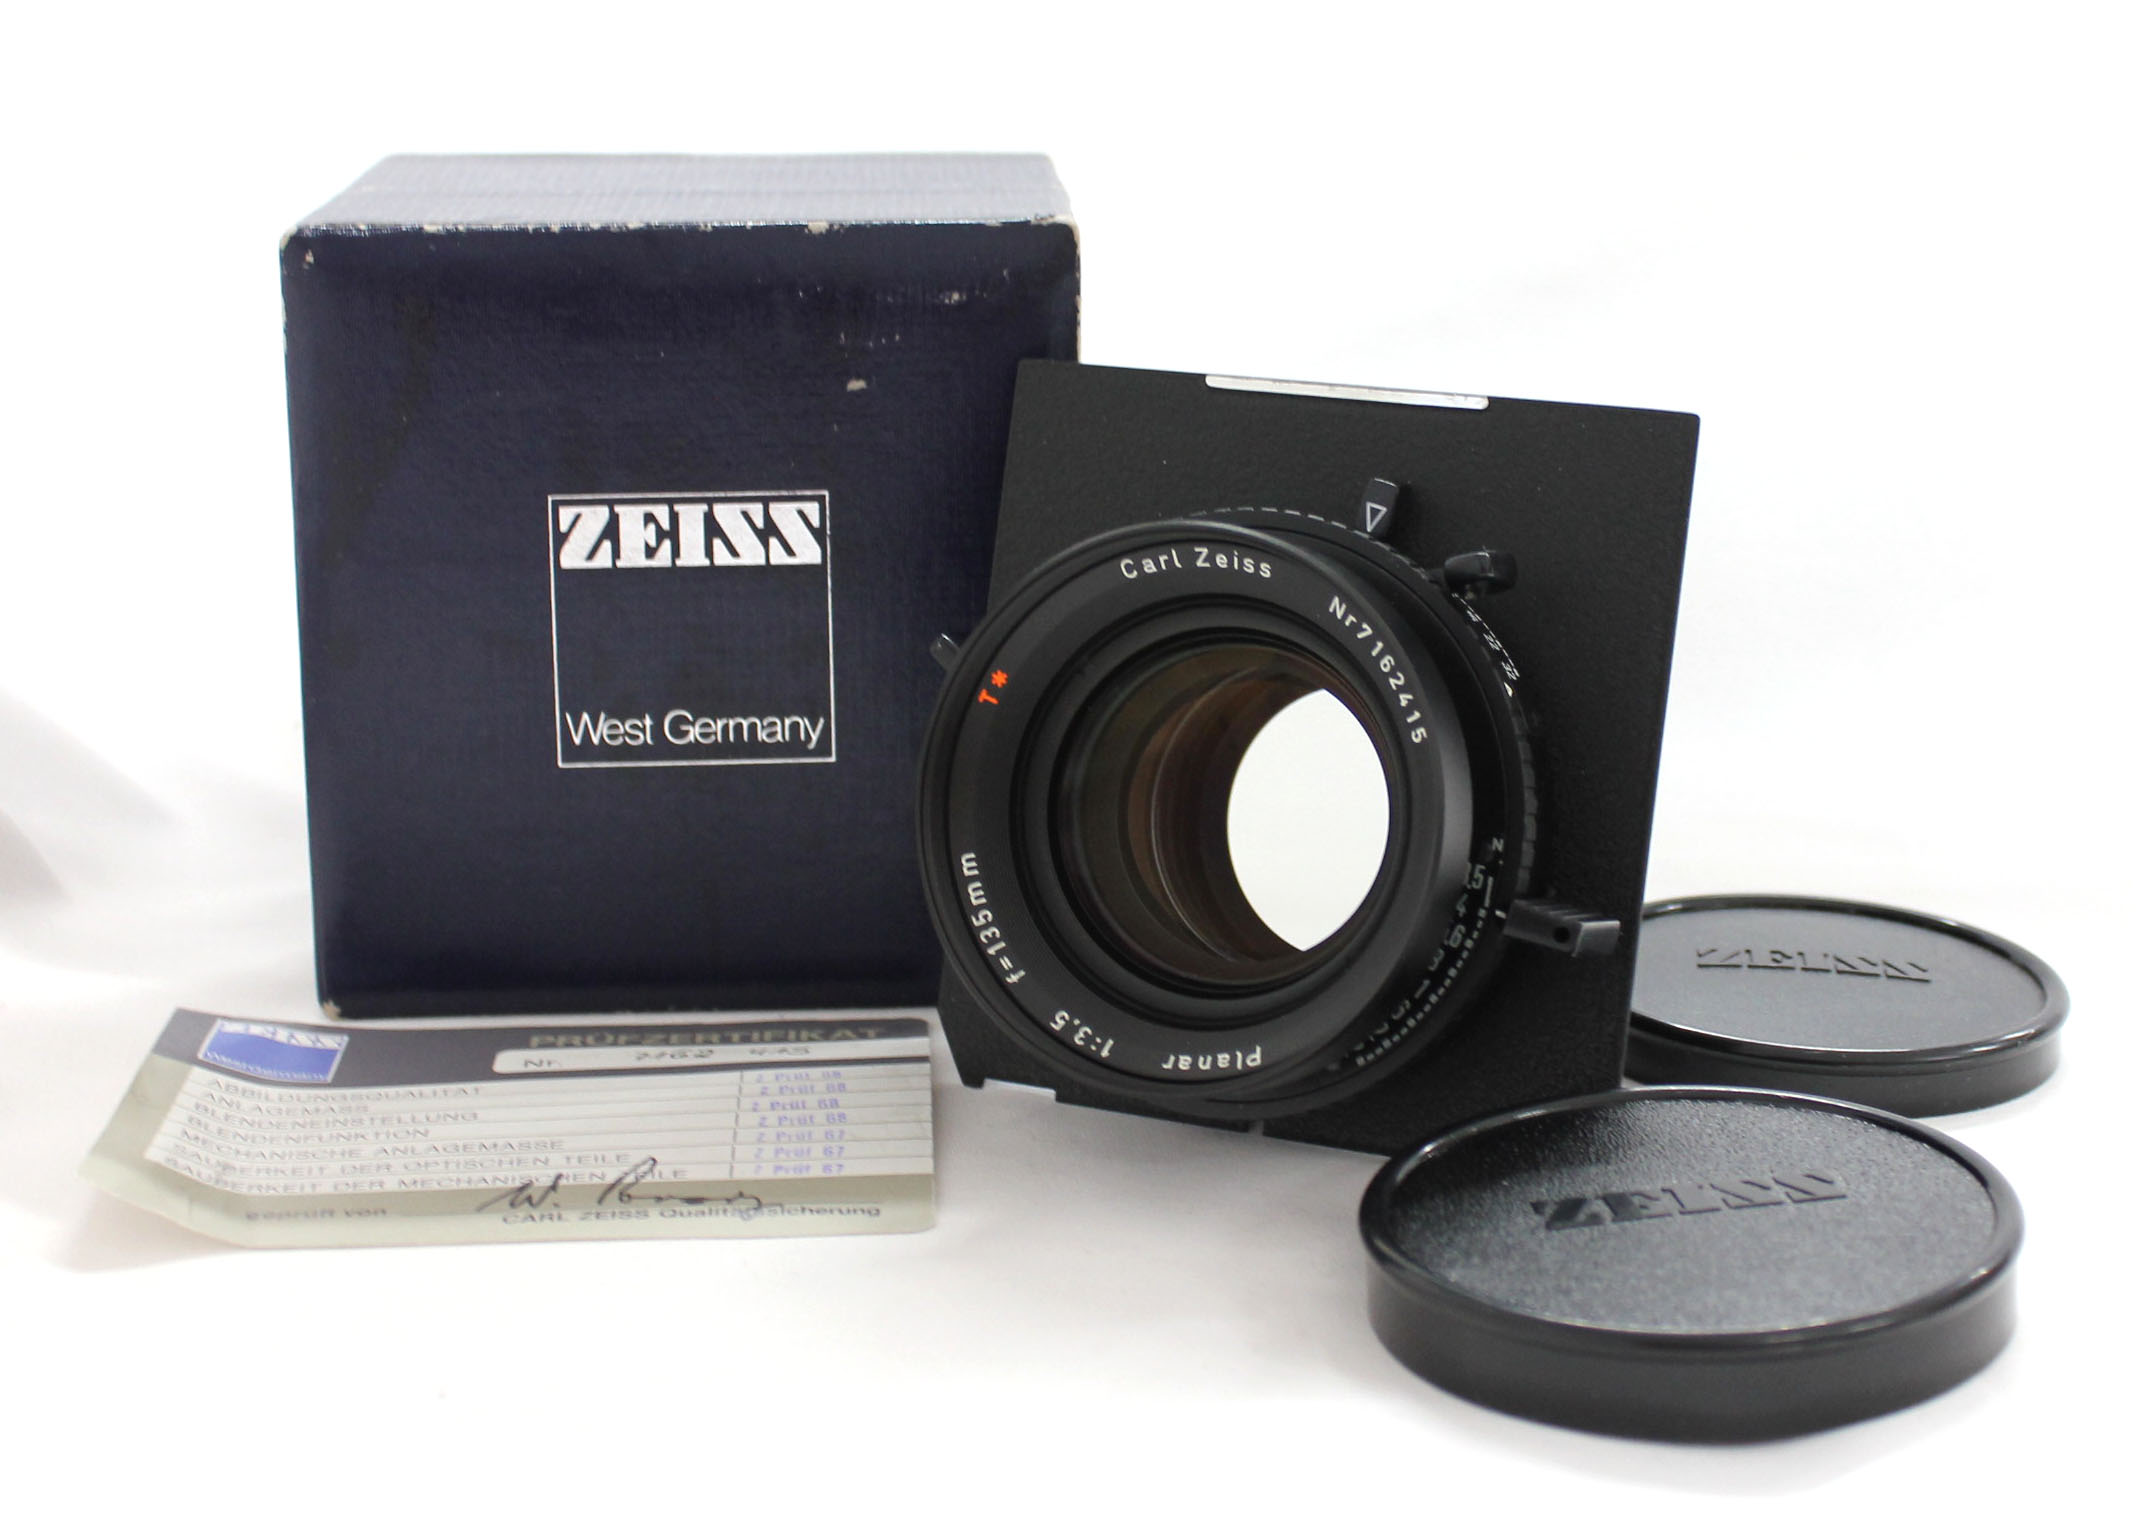 Japan Used Camera Shop | [Mint] Carl Zeiss Planar 135mm F/3.5 T* 4x5 Lens Compur 1 Shutter w/ Toyo Linhof Board from Japan